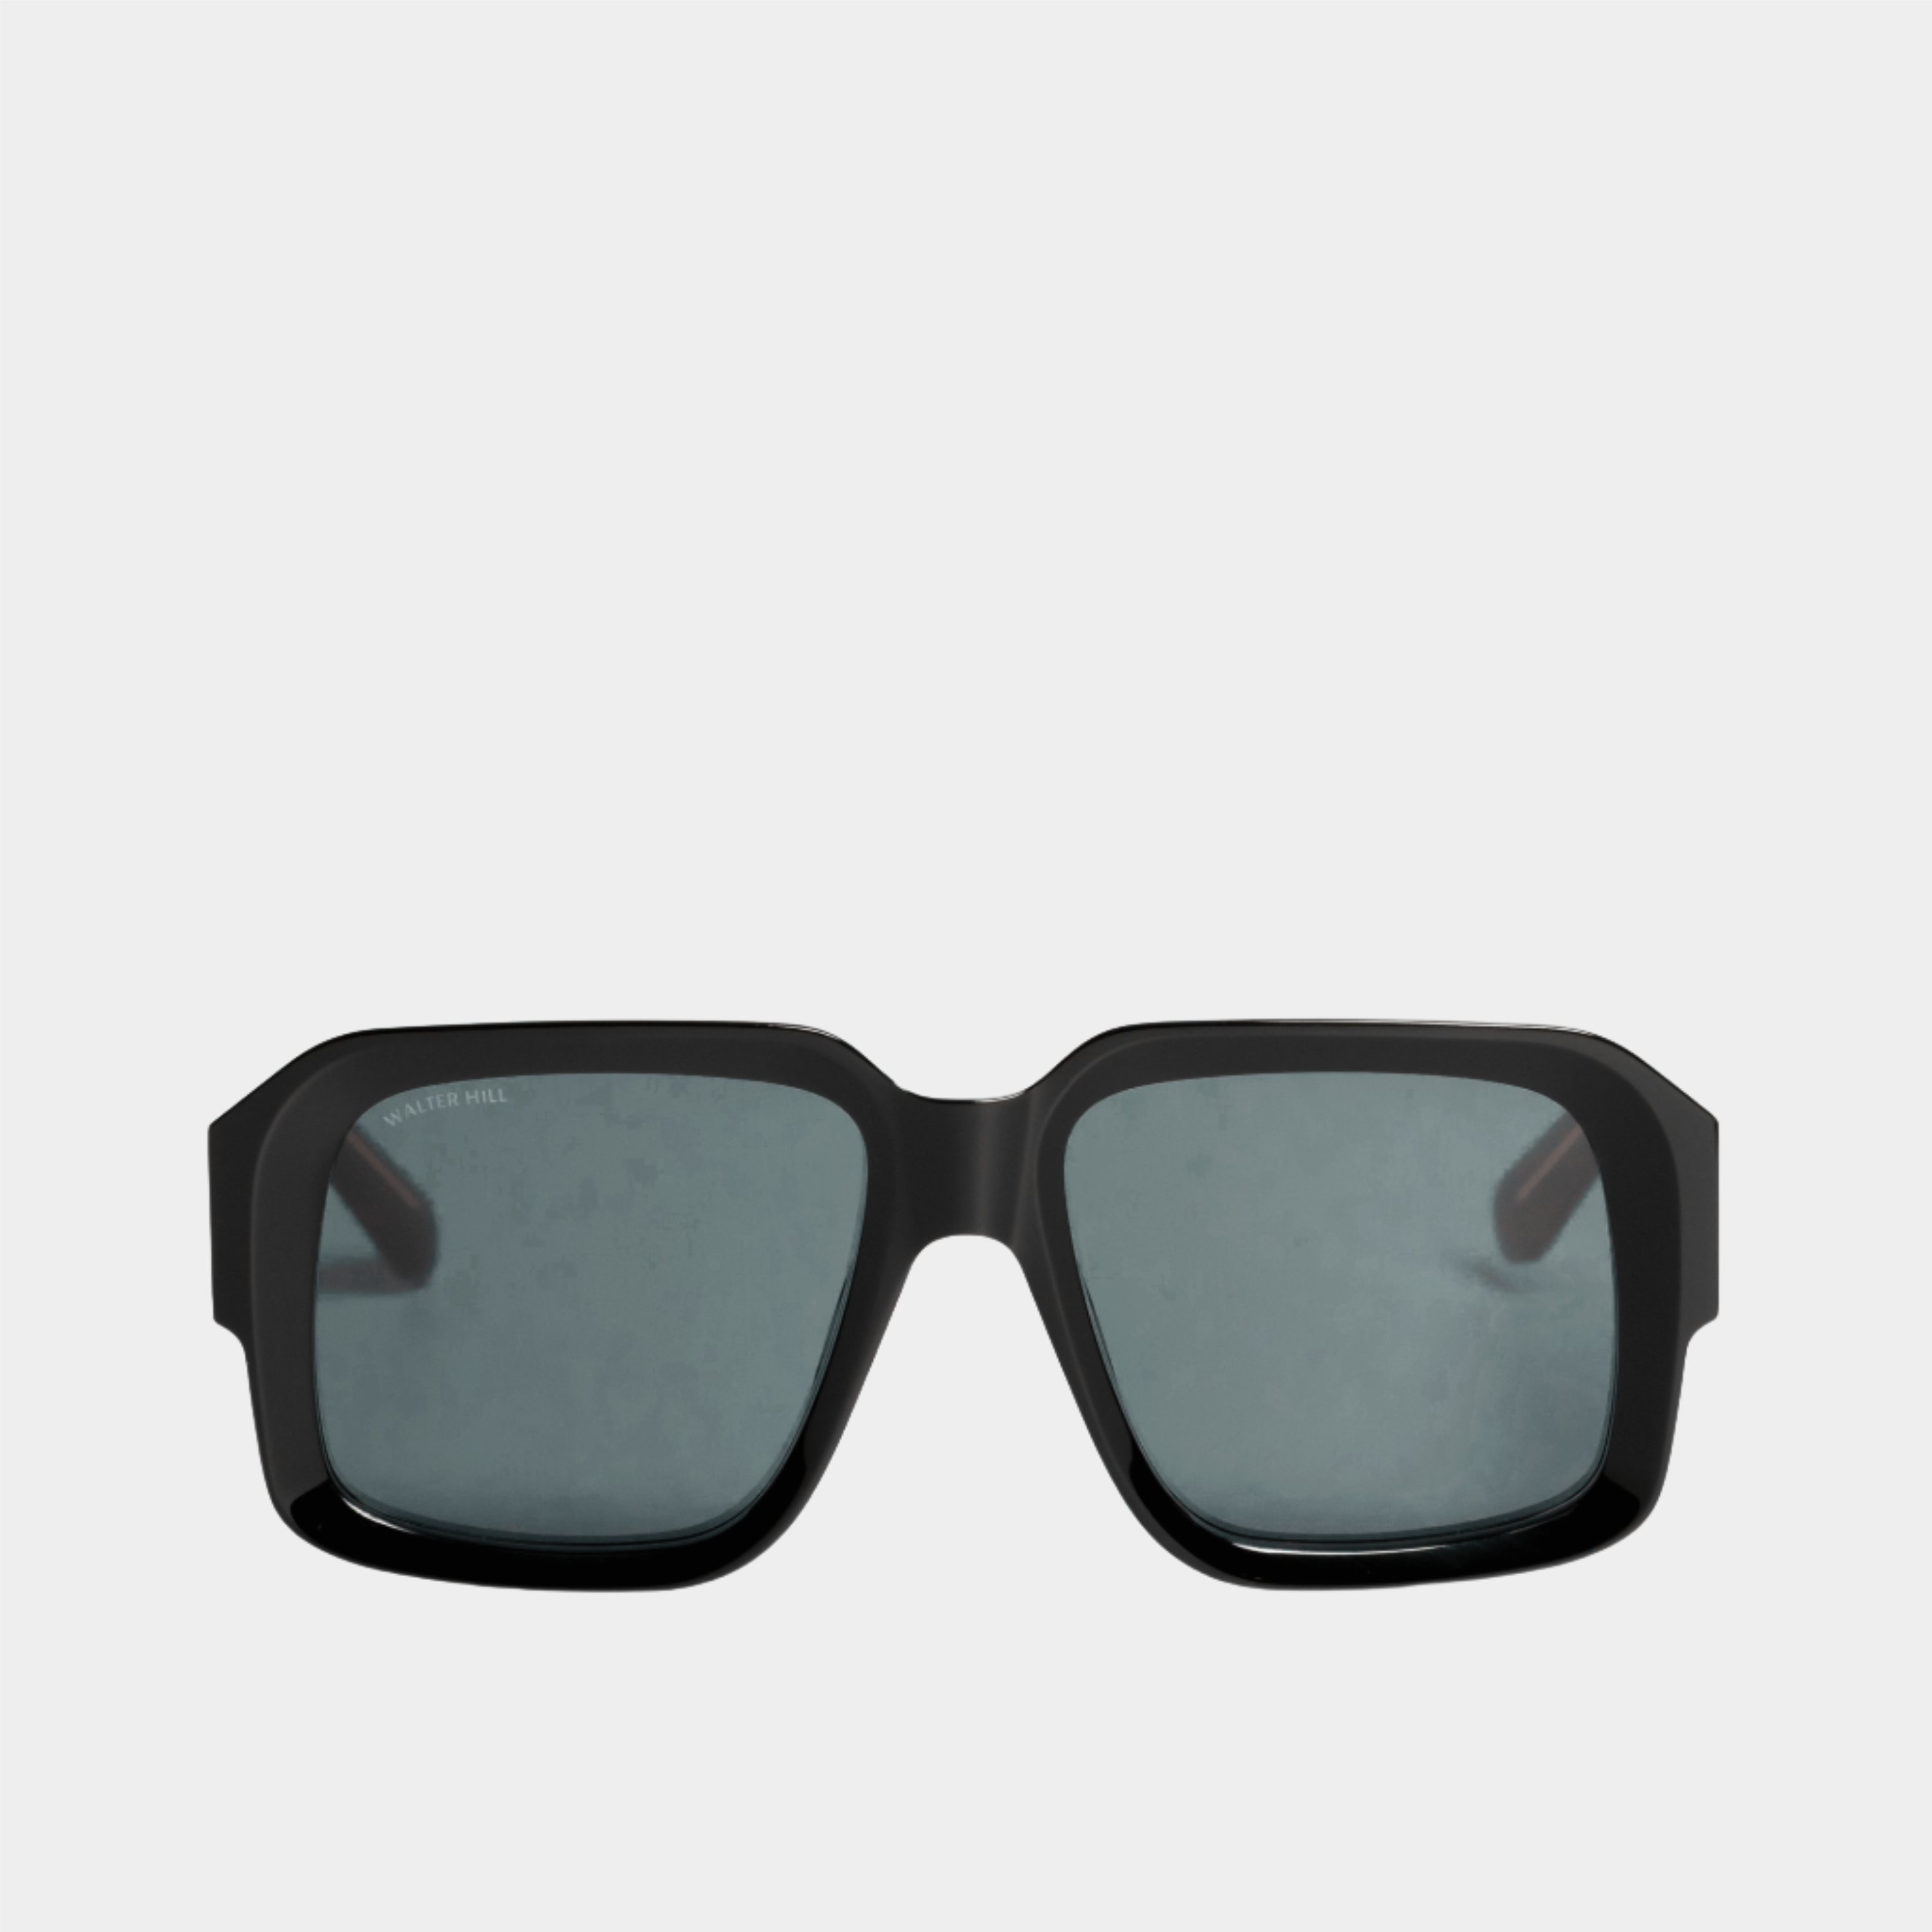 Walter Hill Sunglasses Medium/Large / Cat.2 / Mazzucchelli Acetate AJ - Black